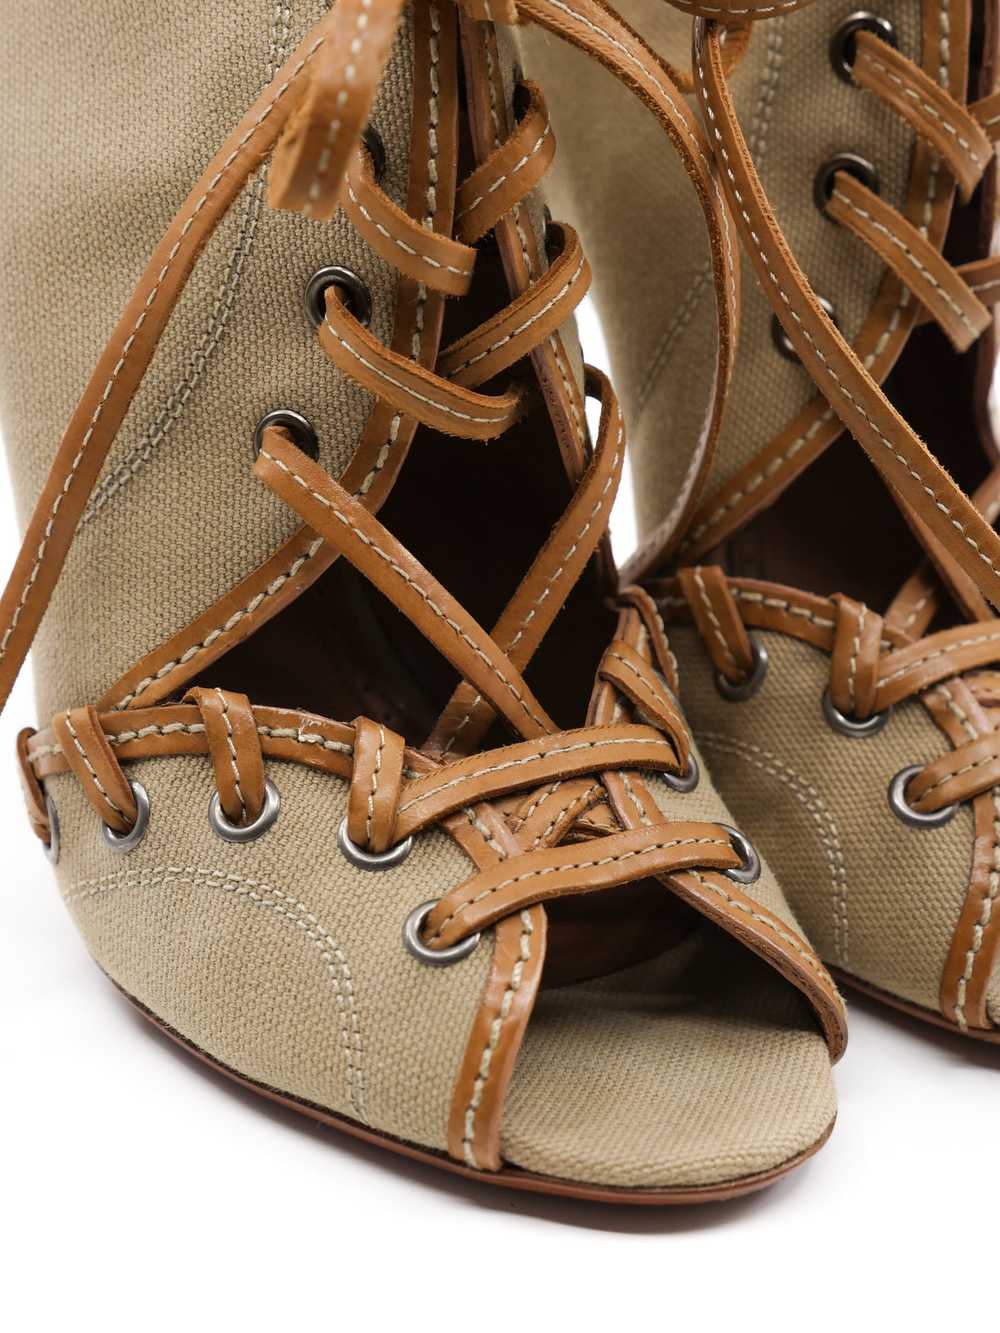 Alaia Laced Canvas Heeled Sandal, 36 - image 2